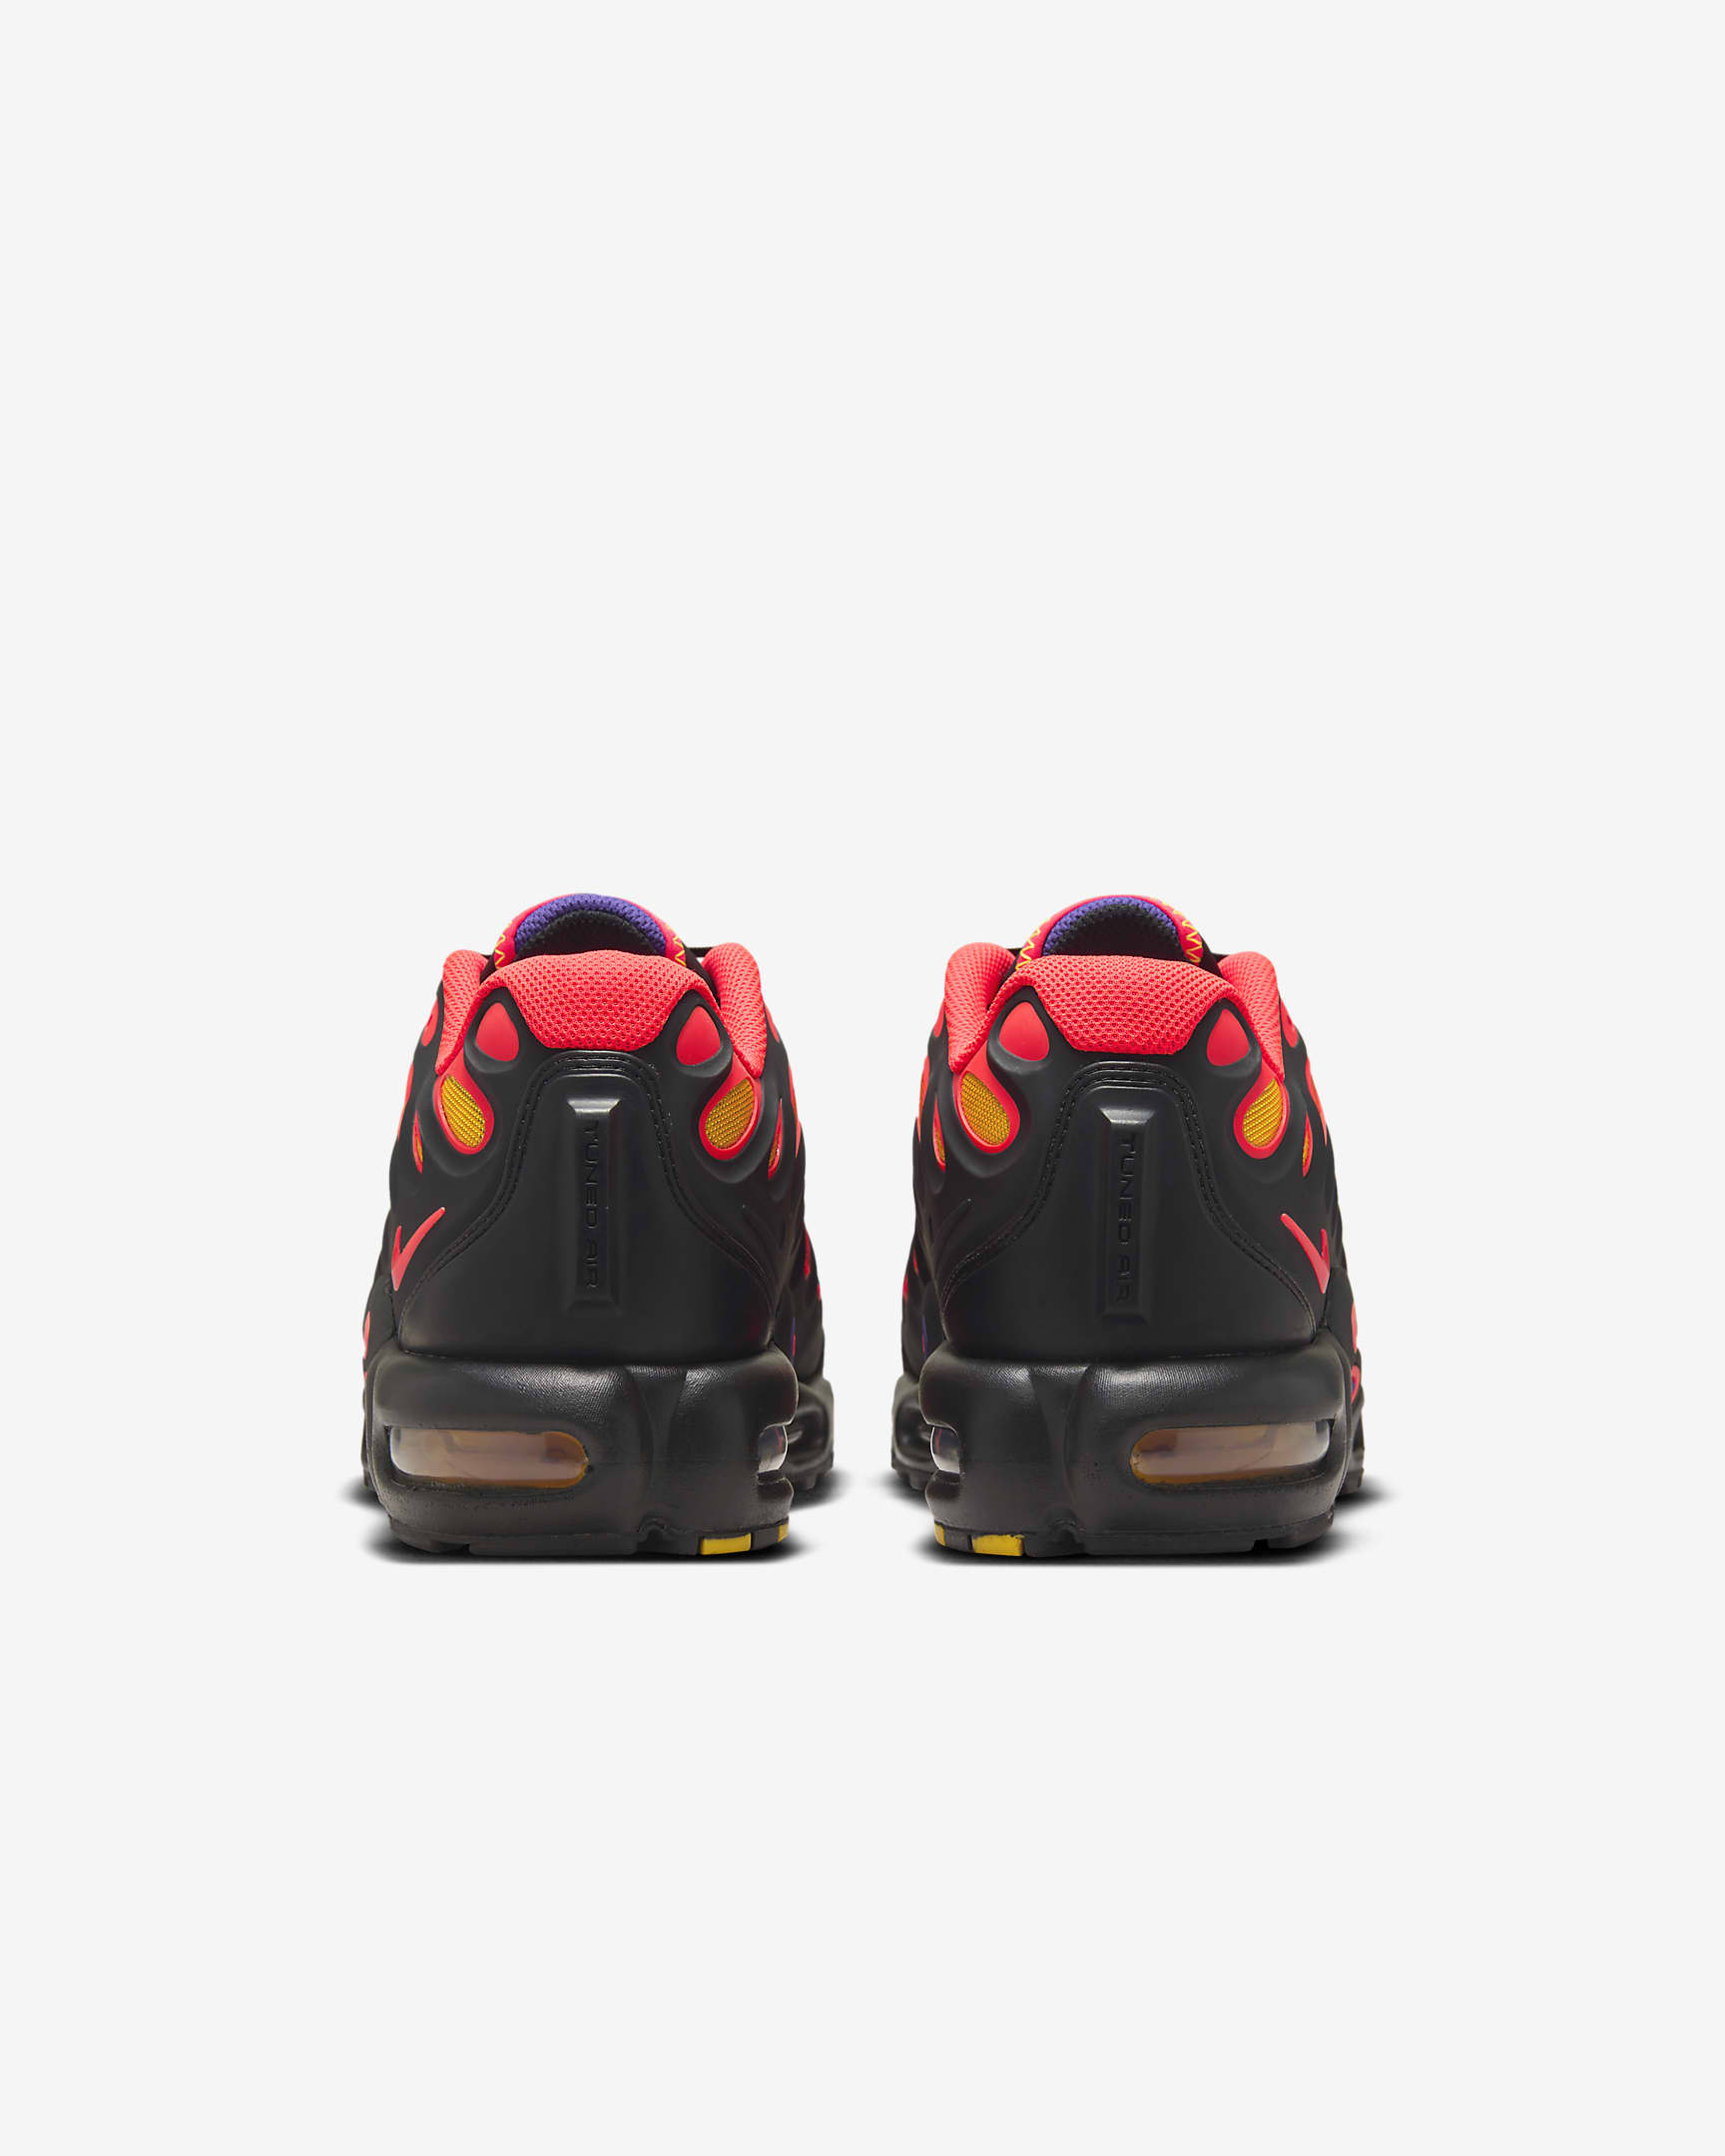 Sapatilhas Nike Air Max Plus Drift para homem - Preto/Roxo Field/Laranja Laser/Carmesim Bright